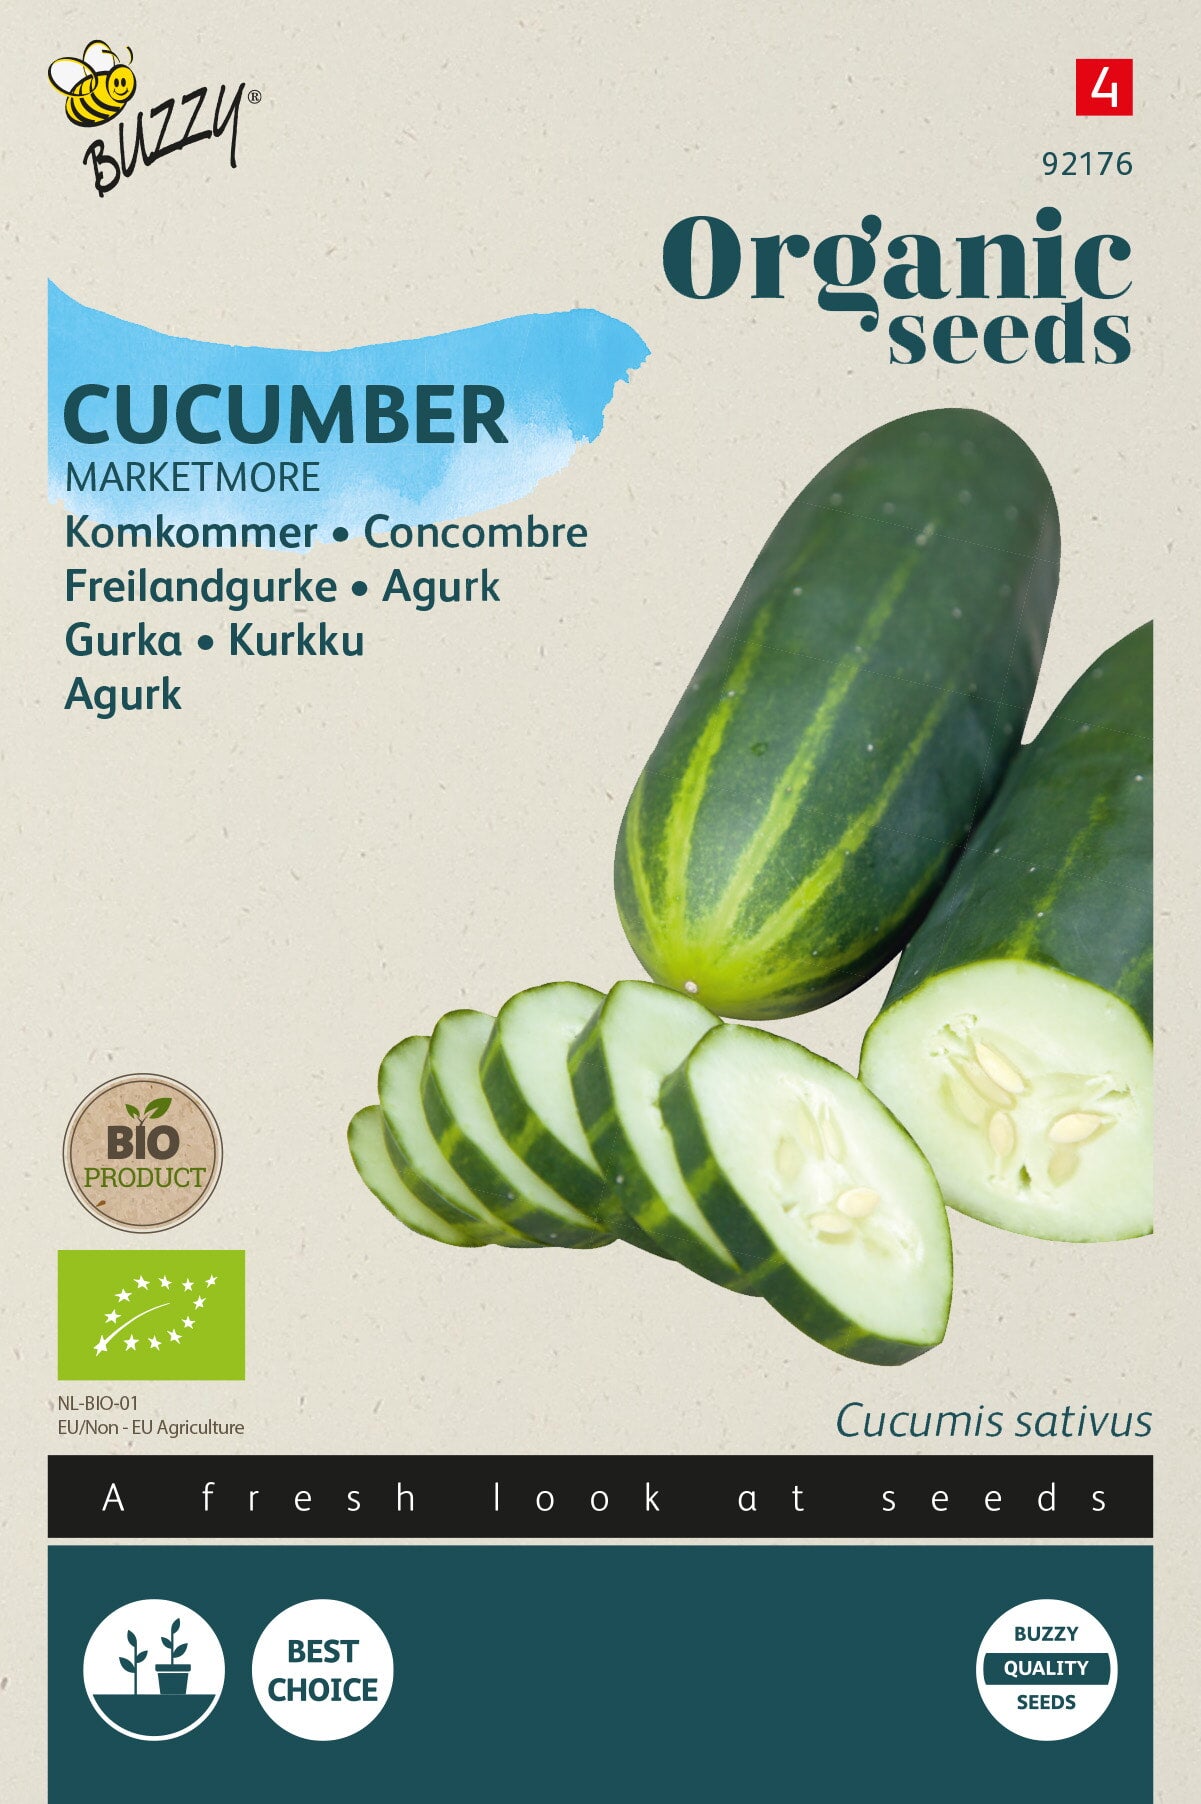 Buzzy® Organic Komkommer Marketmore  (BIO)